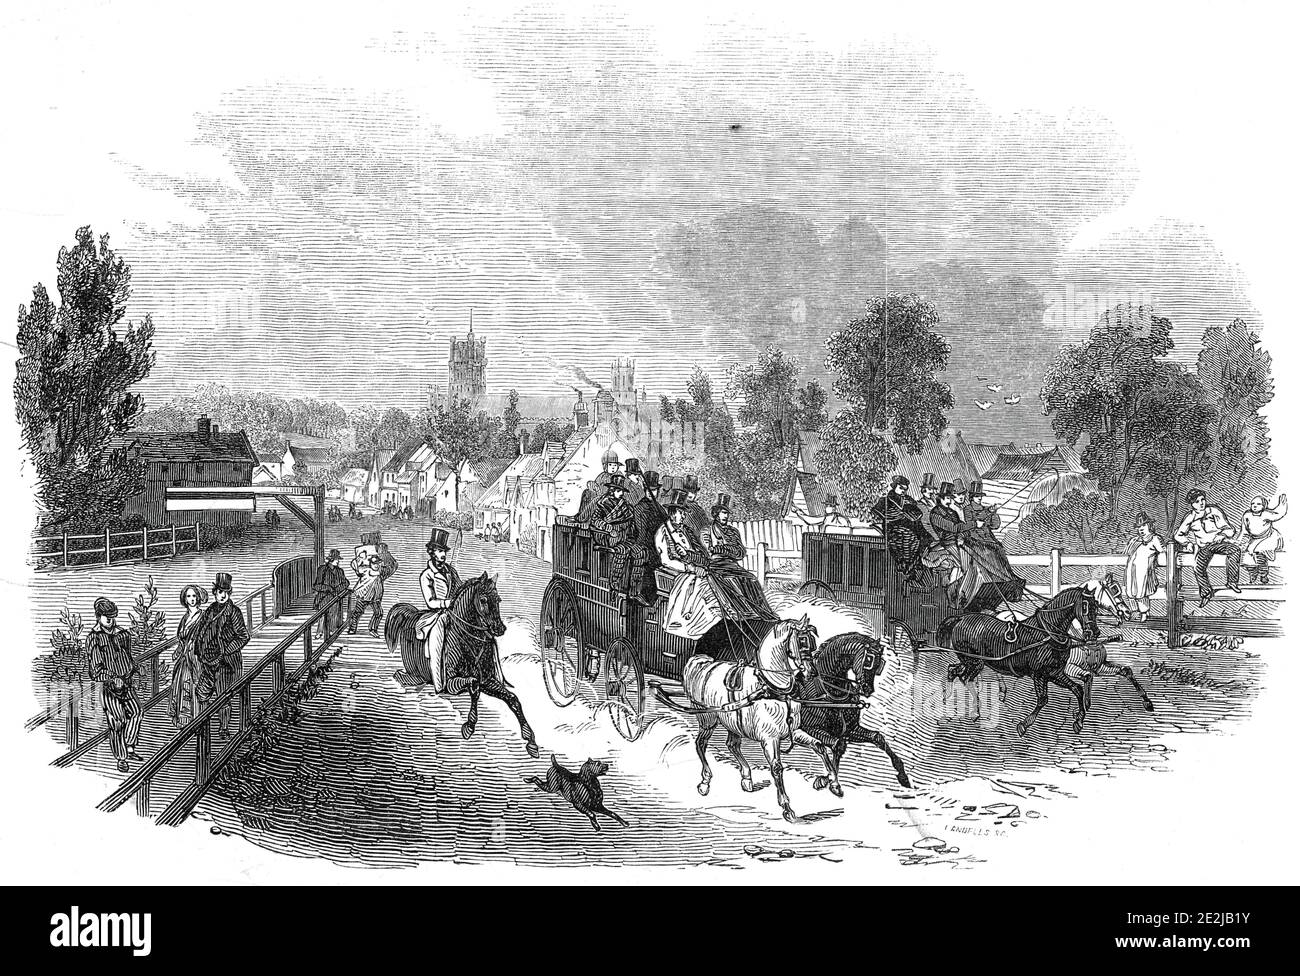 Ely, vom Bahnhof, 1845. Reisebusse in der Stadt Cambridgeshire Ely. Aus "Illustrated London News", 1845, Vol VII. Stockfoto